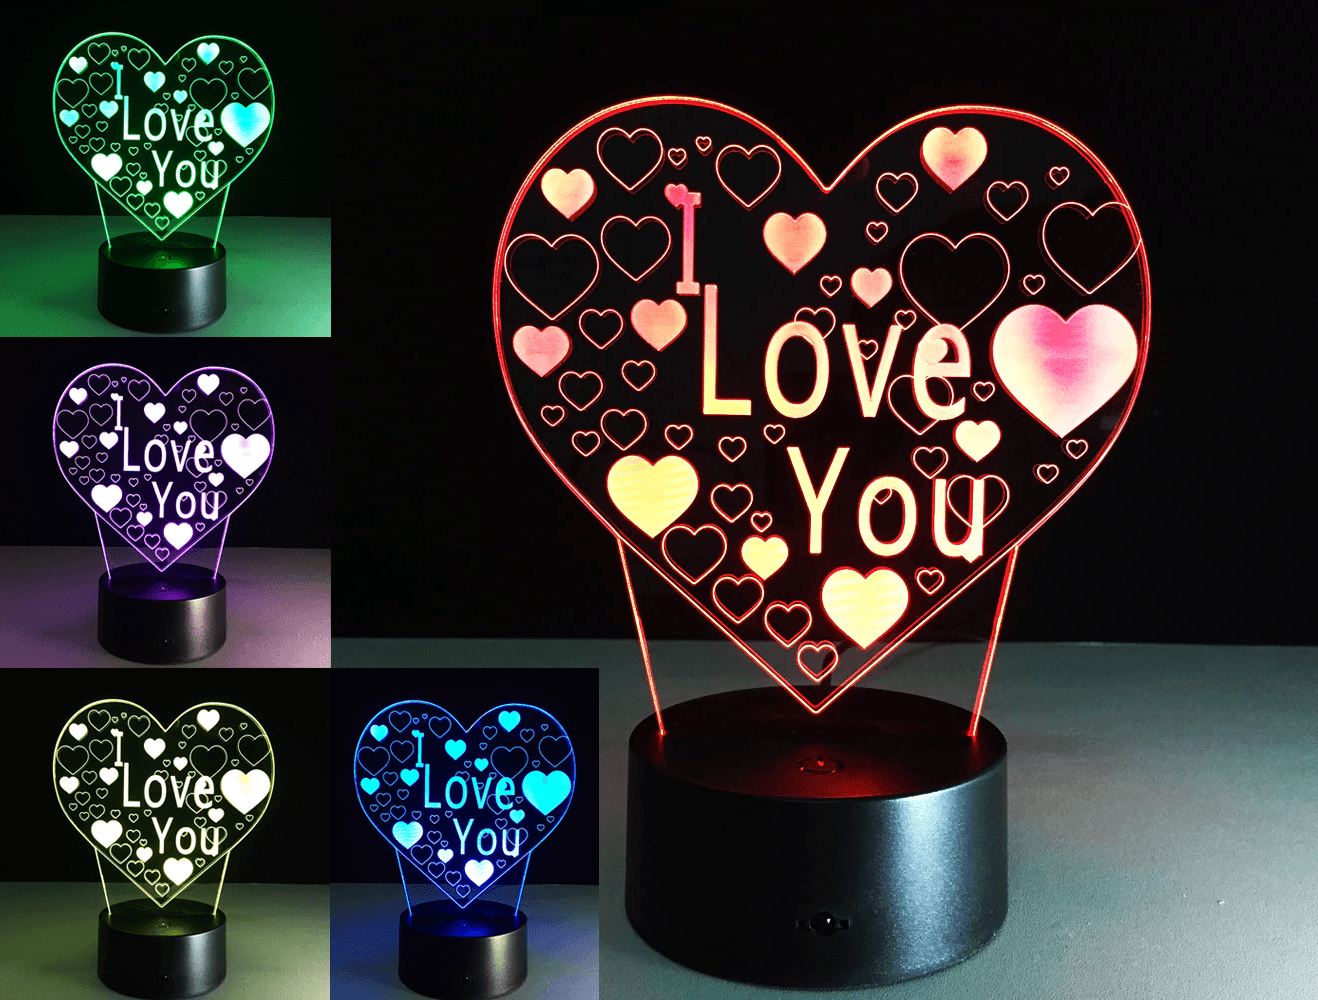 Lampka nocna 3D LED "I LOVE YOU" mała